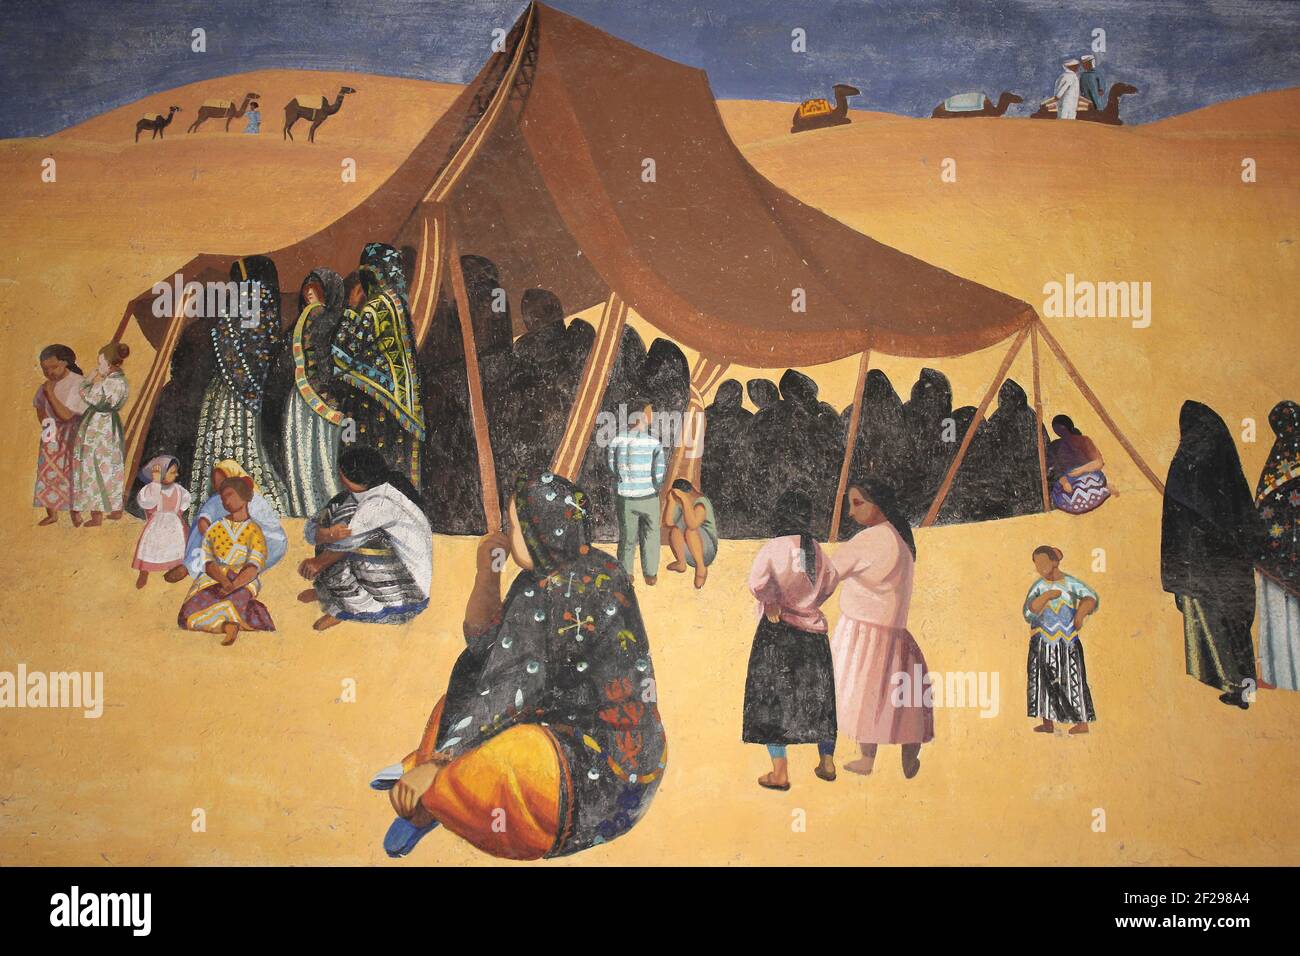 Marokkanische Beduinen Kunst zeigt Zelt und Kamele in der Sahara Sanddünen Stockfoto